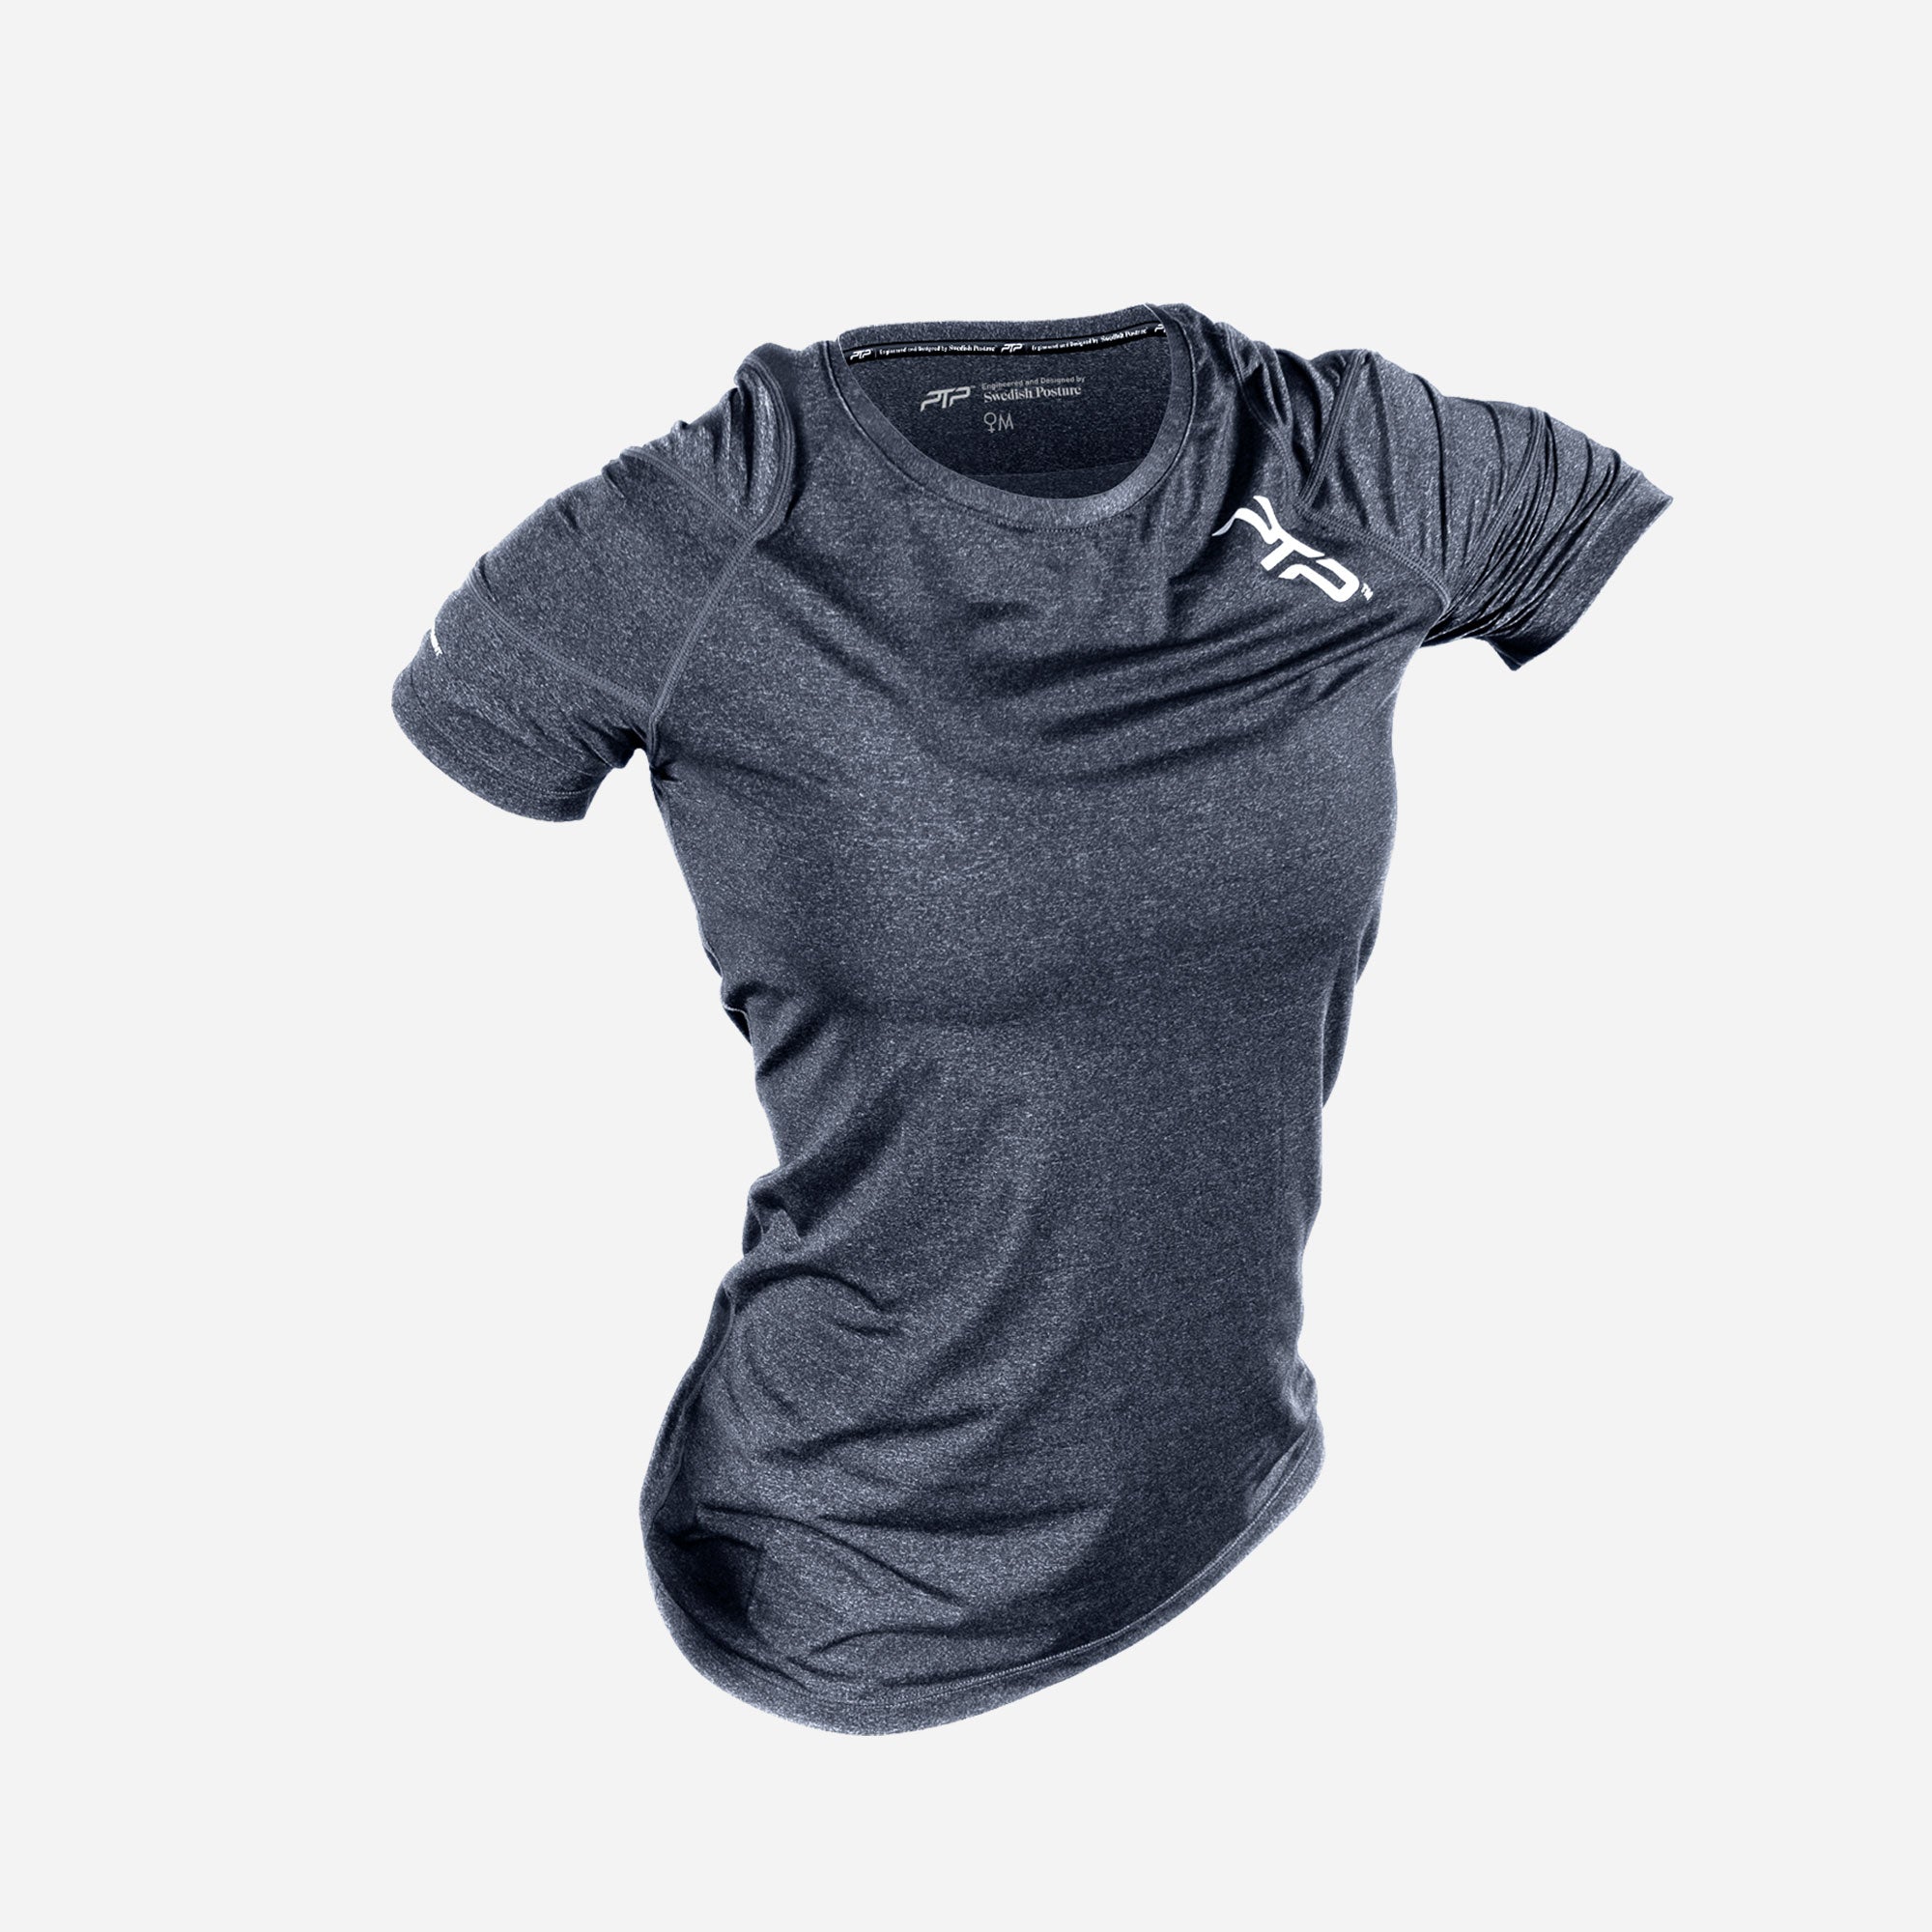 Swedish Posture - Women's Posture T-Shirt Posture Corrector Black